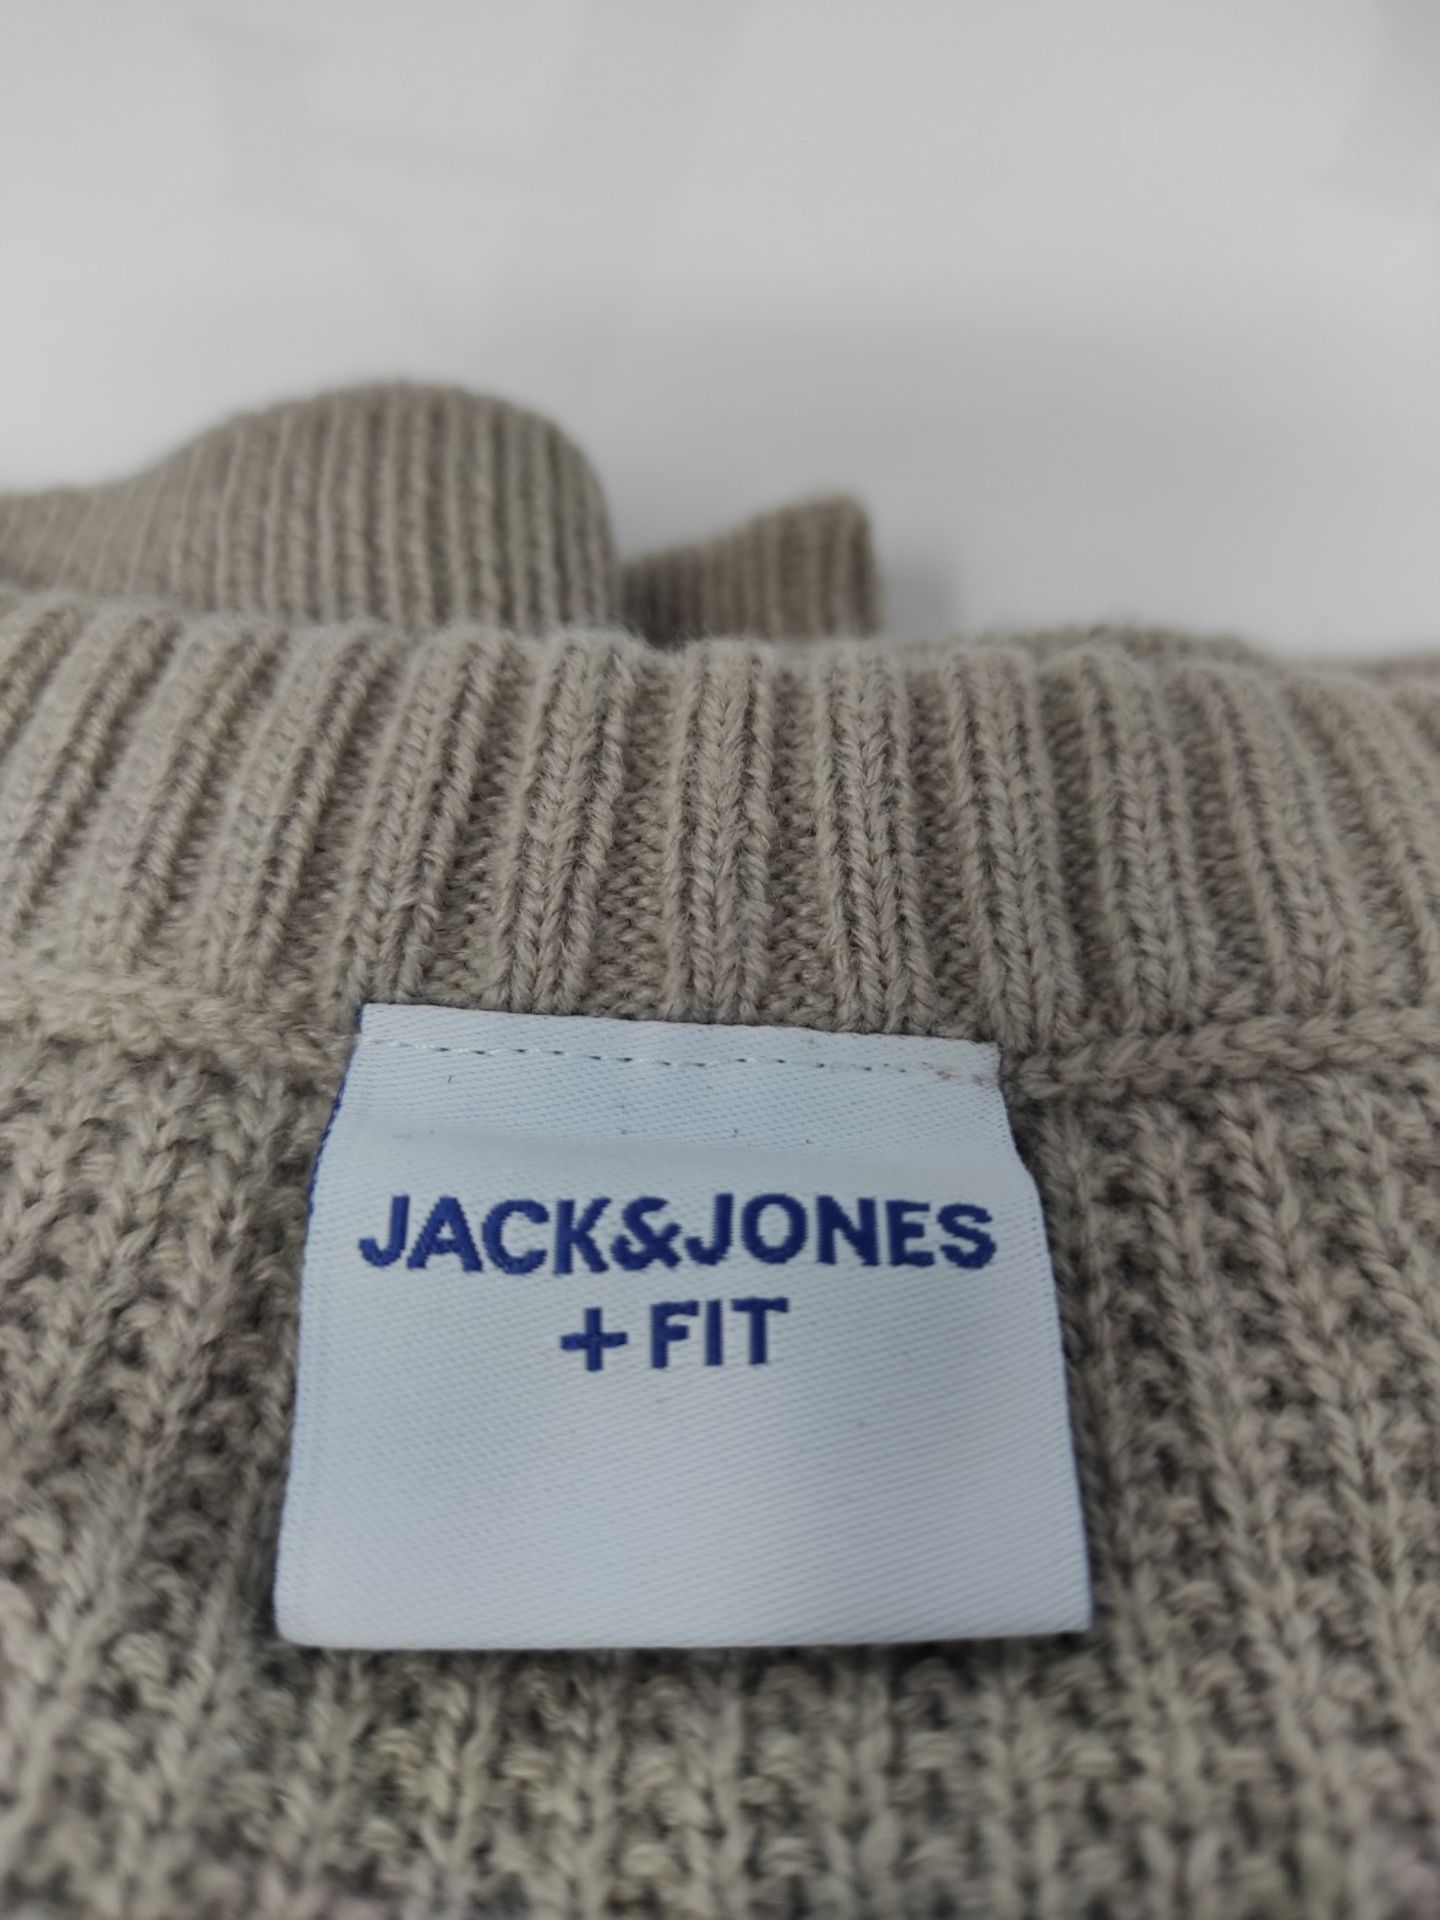 JACK&JONES PLUS Jorkyle Knit Crew Neck Plus Knitted Sweater, Atmosphere, XXXL Men - Image 3 of 3